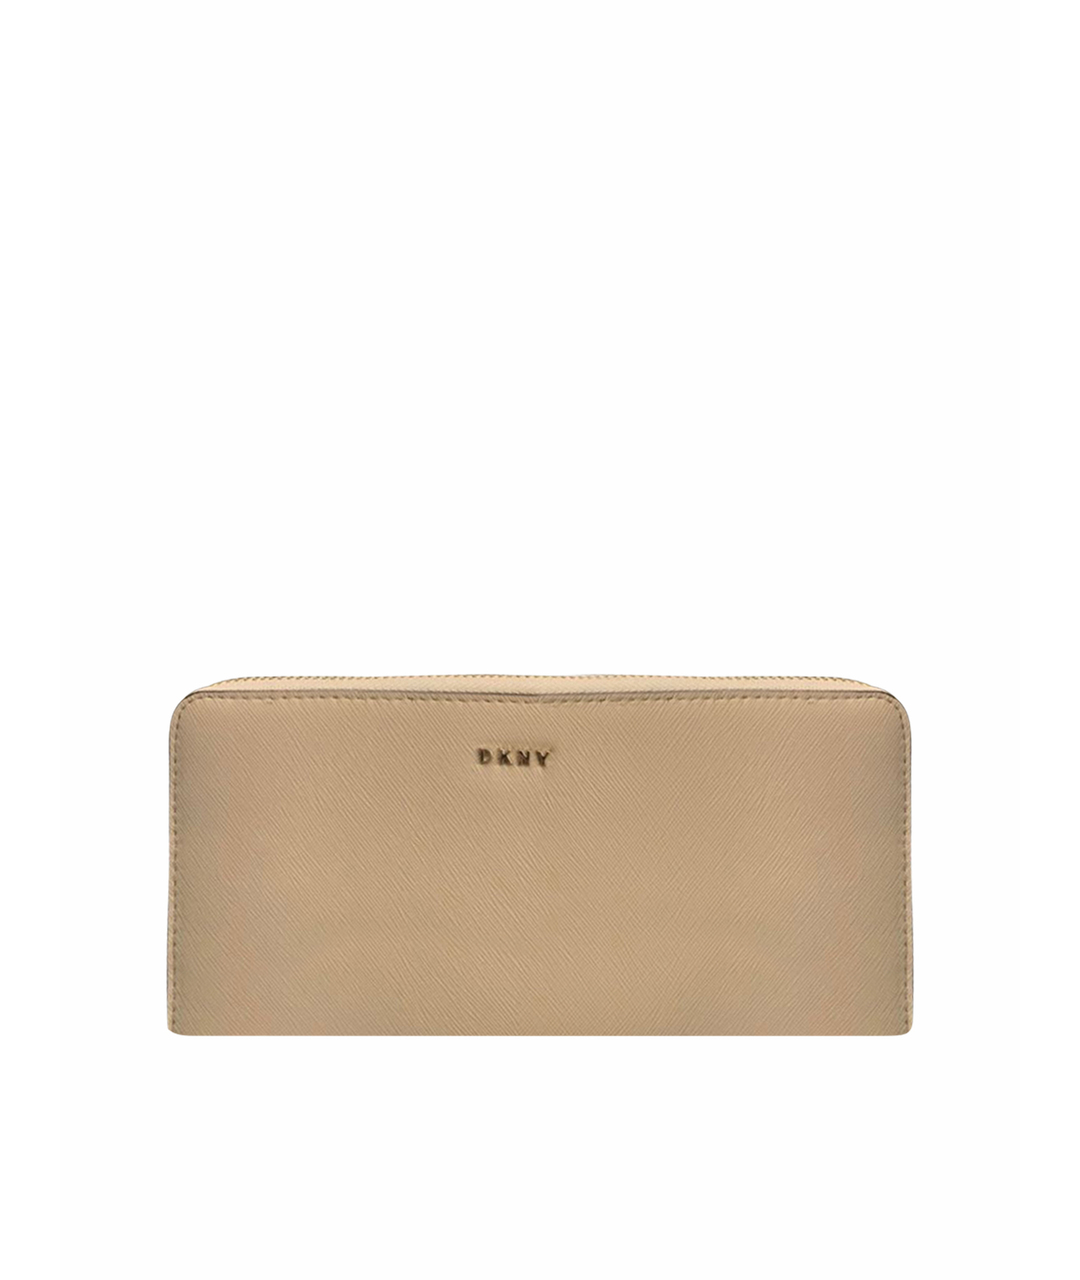 DKNY Бежевый кожаный кошелек, фото 1